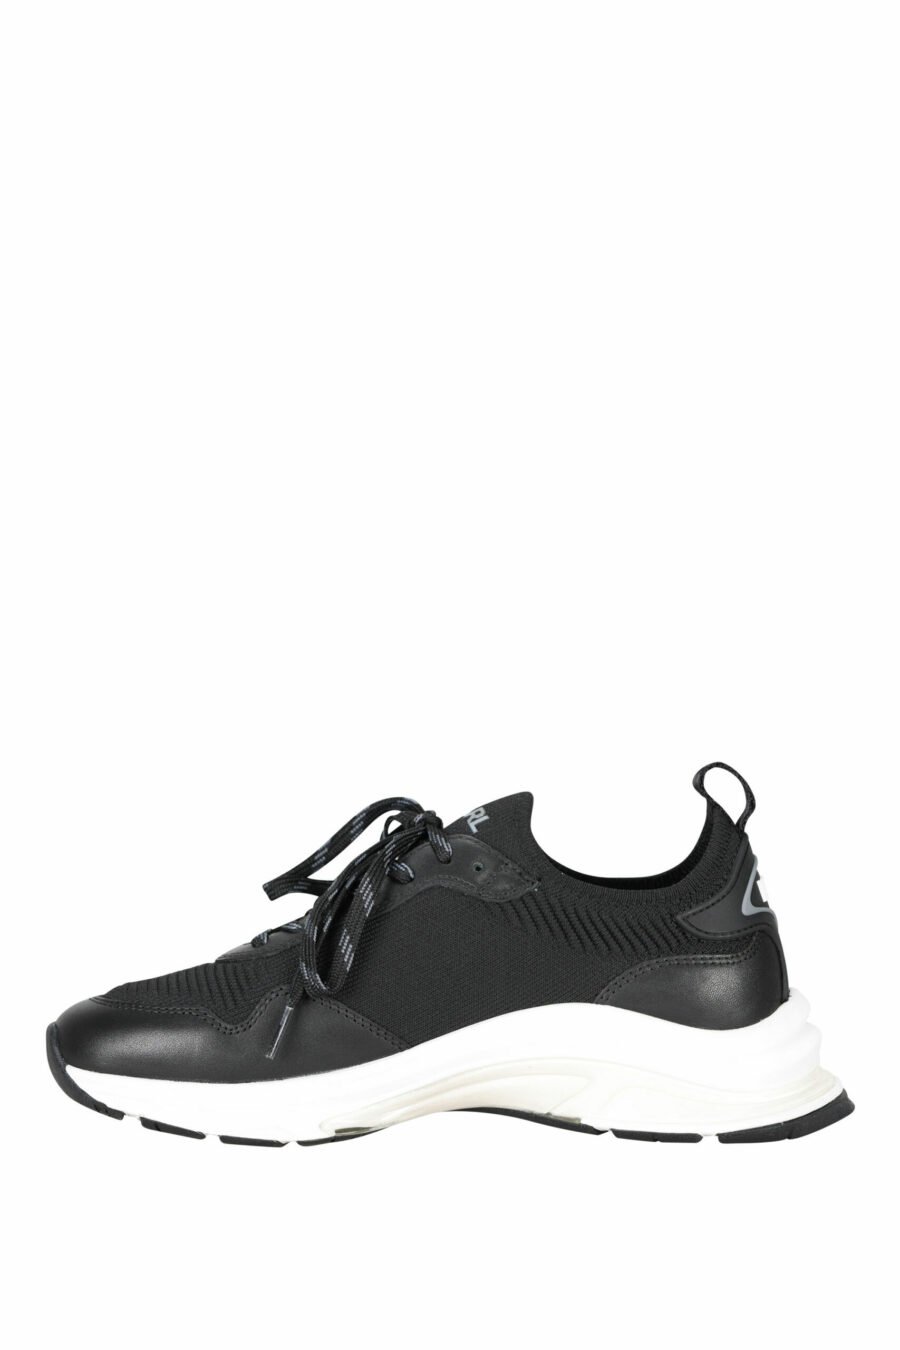 Zapatillas negras "lux finesse" con logo "st rue guillaume" - 5059529293511 2 scaled